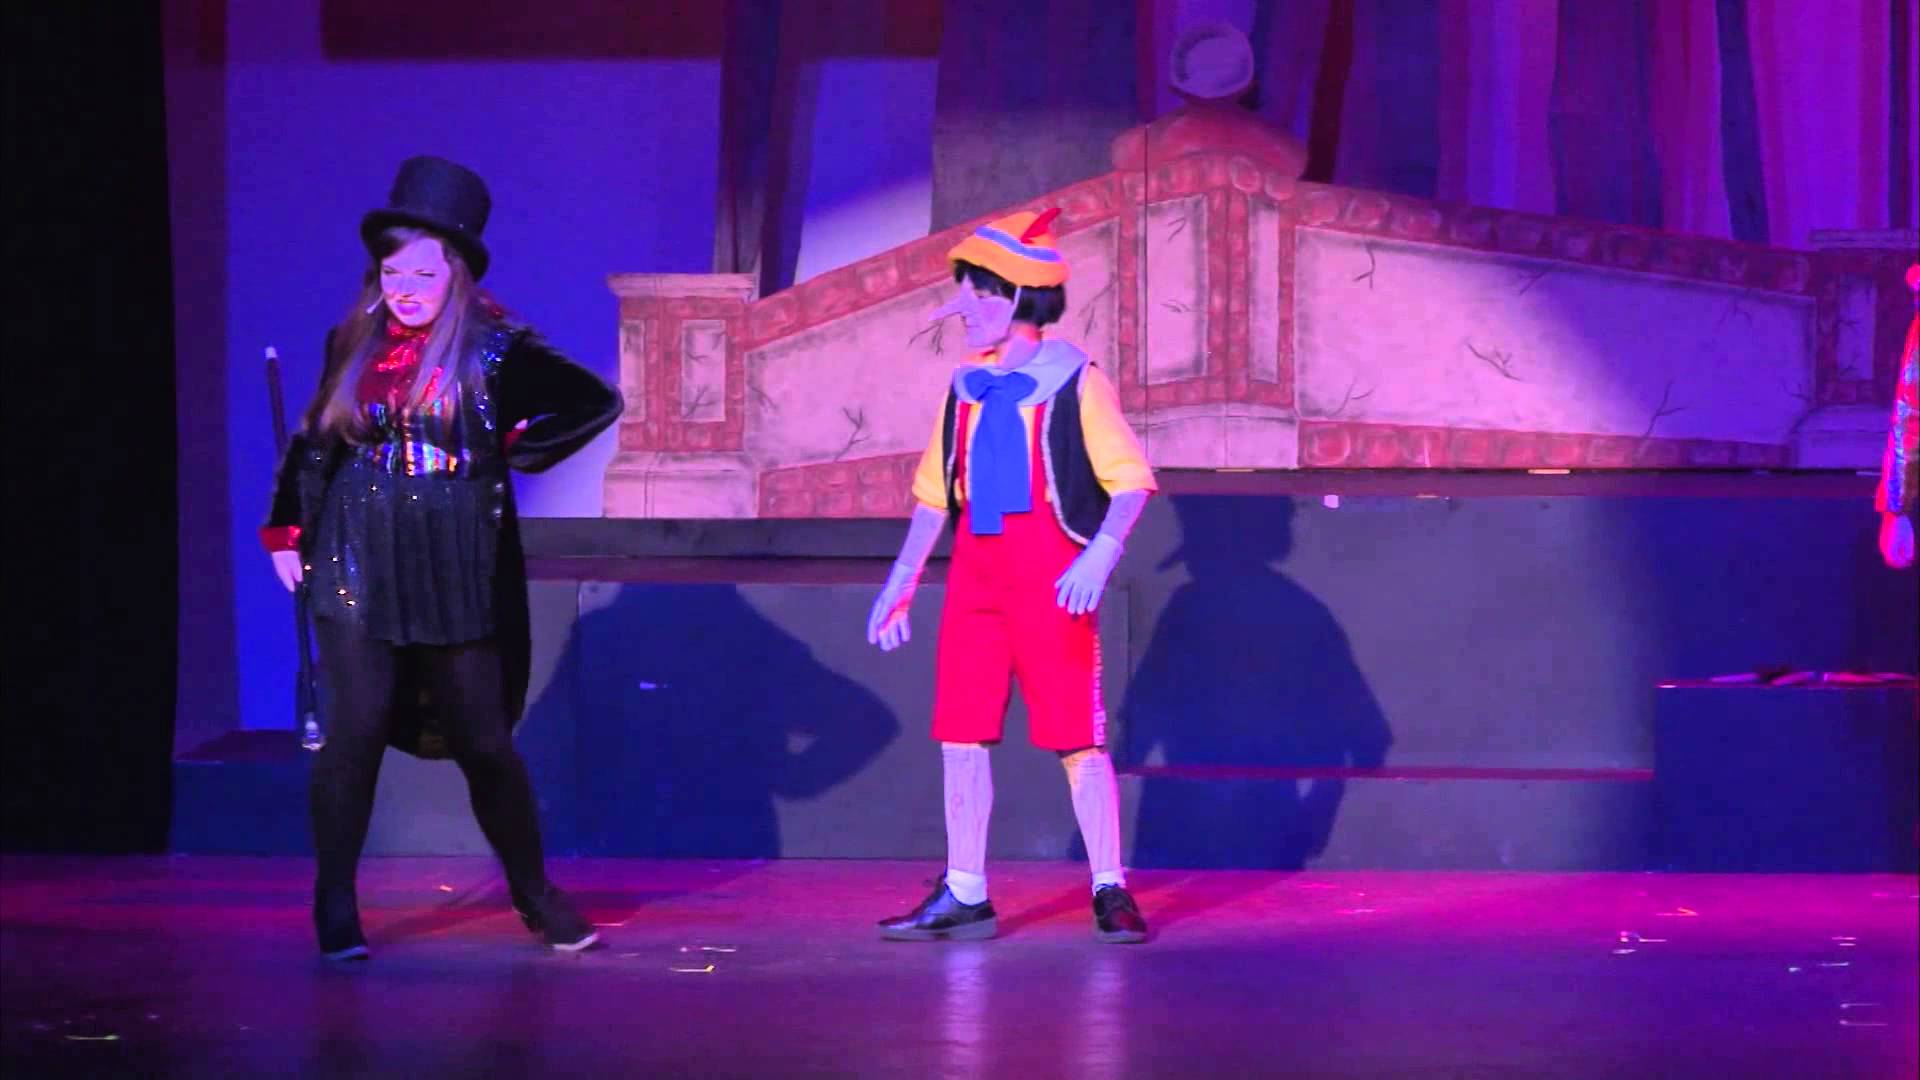 Tuscaloosa Children's Theatre presents Disney's My Son Pinocchio Jr. at the Historic...